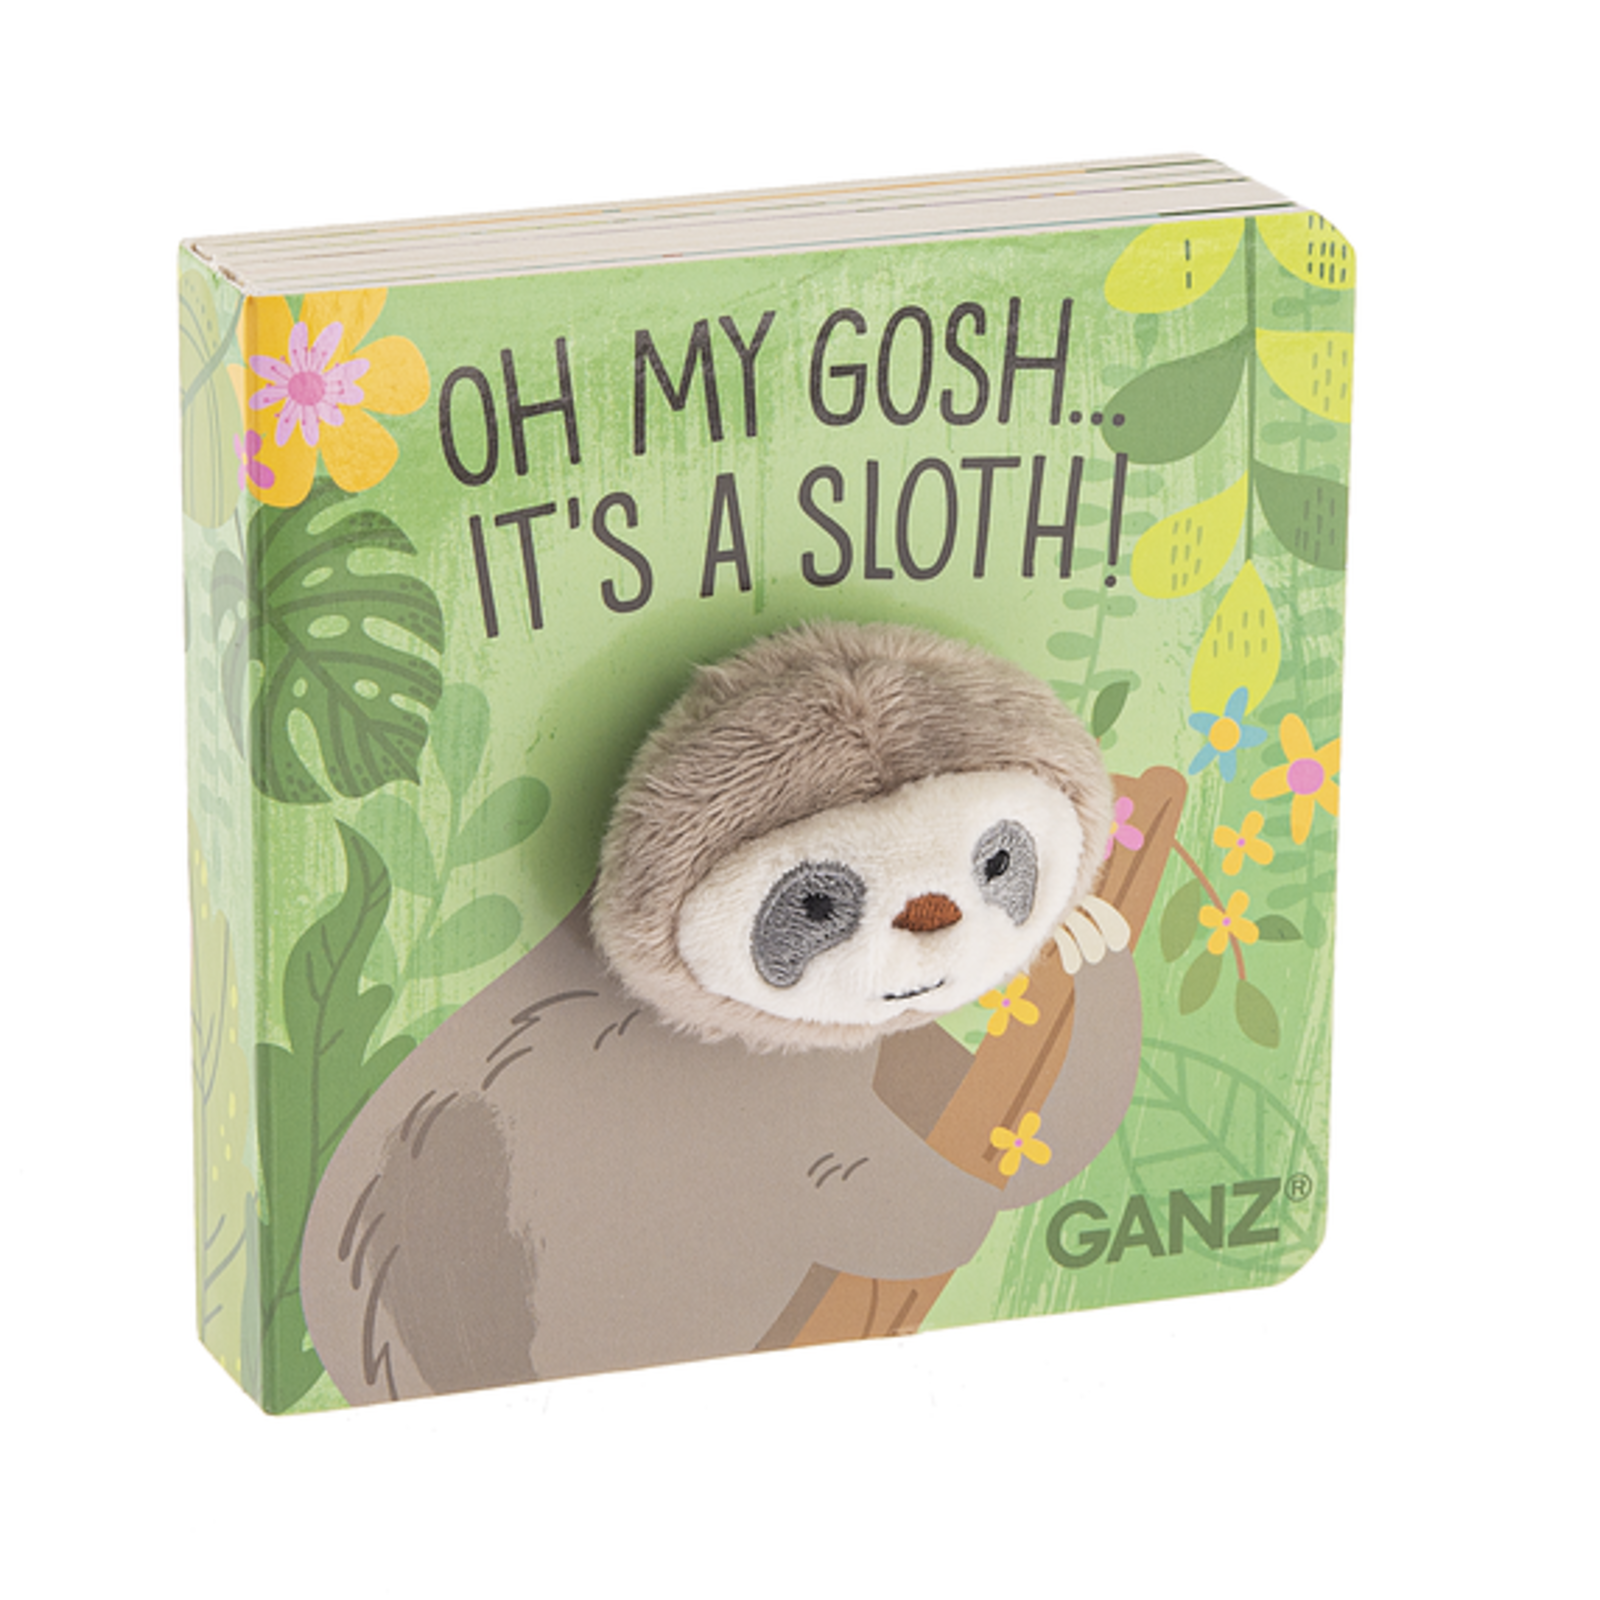 Ganz Sloth Finger Puppet Book   BG4270 loading=